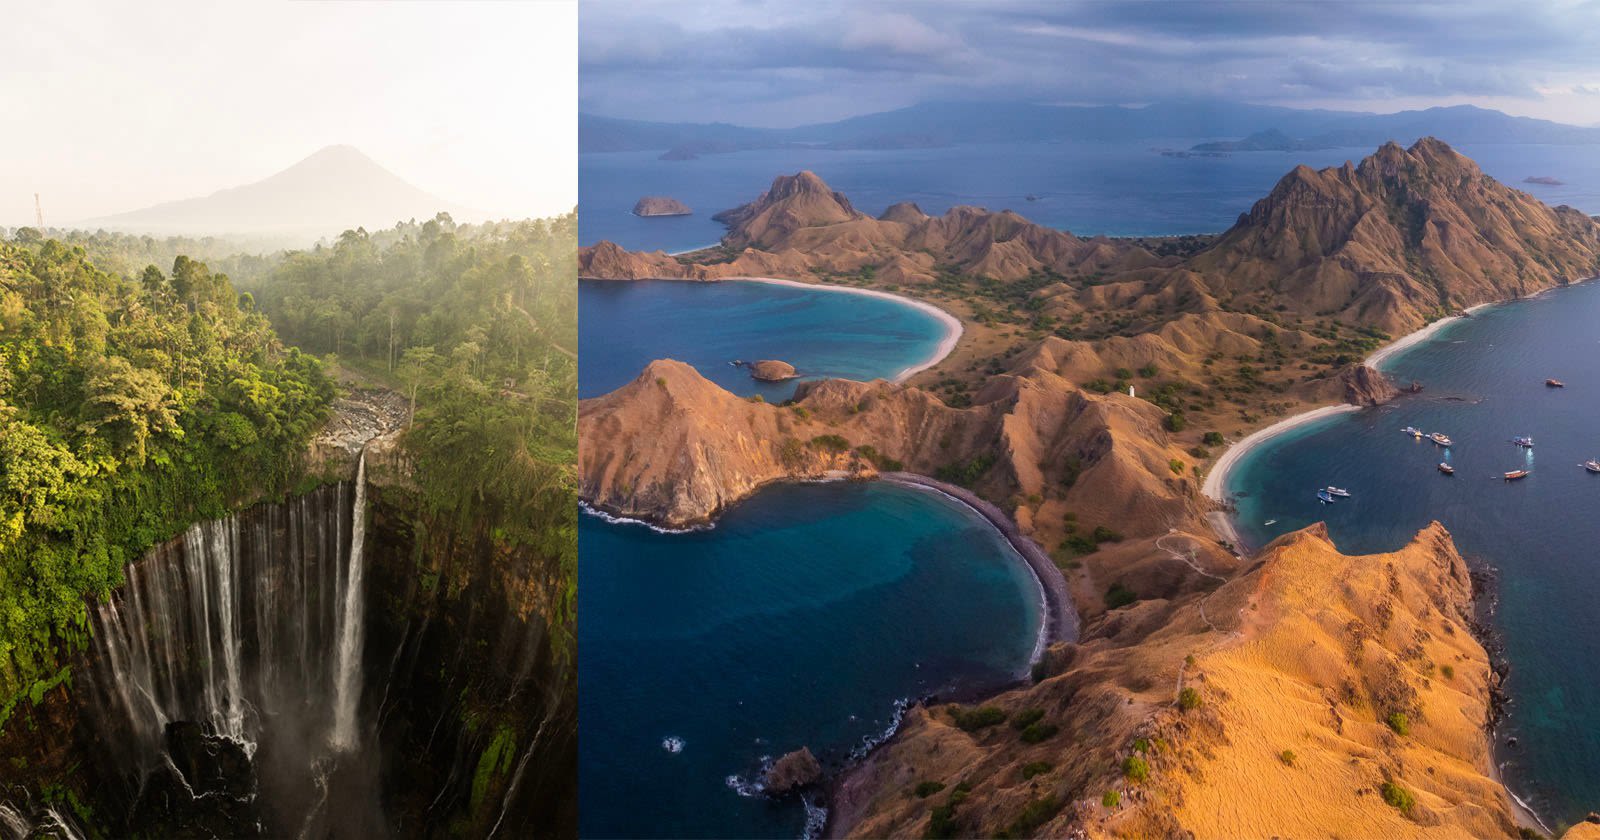 Drone Photographer Captures Epic Photos of Indonesia's Volcanoes